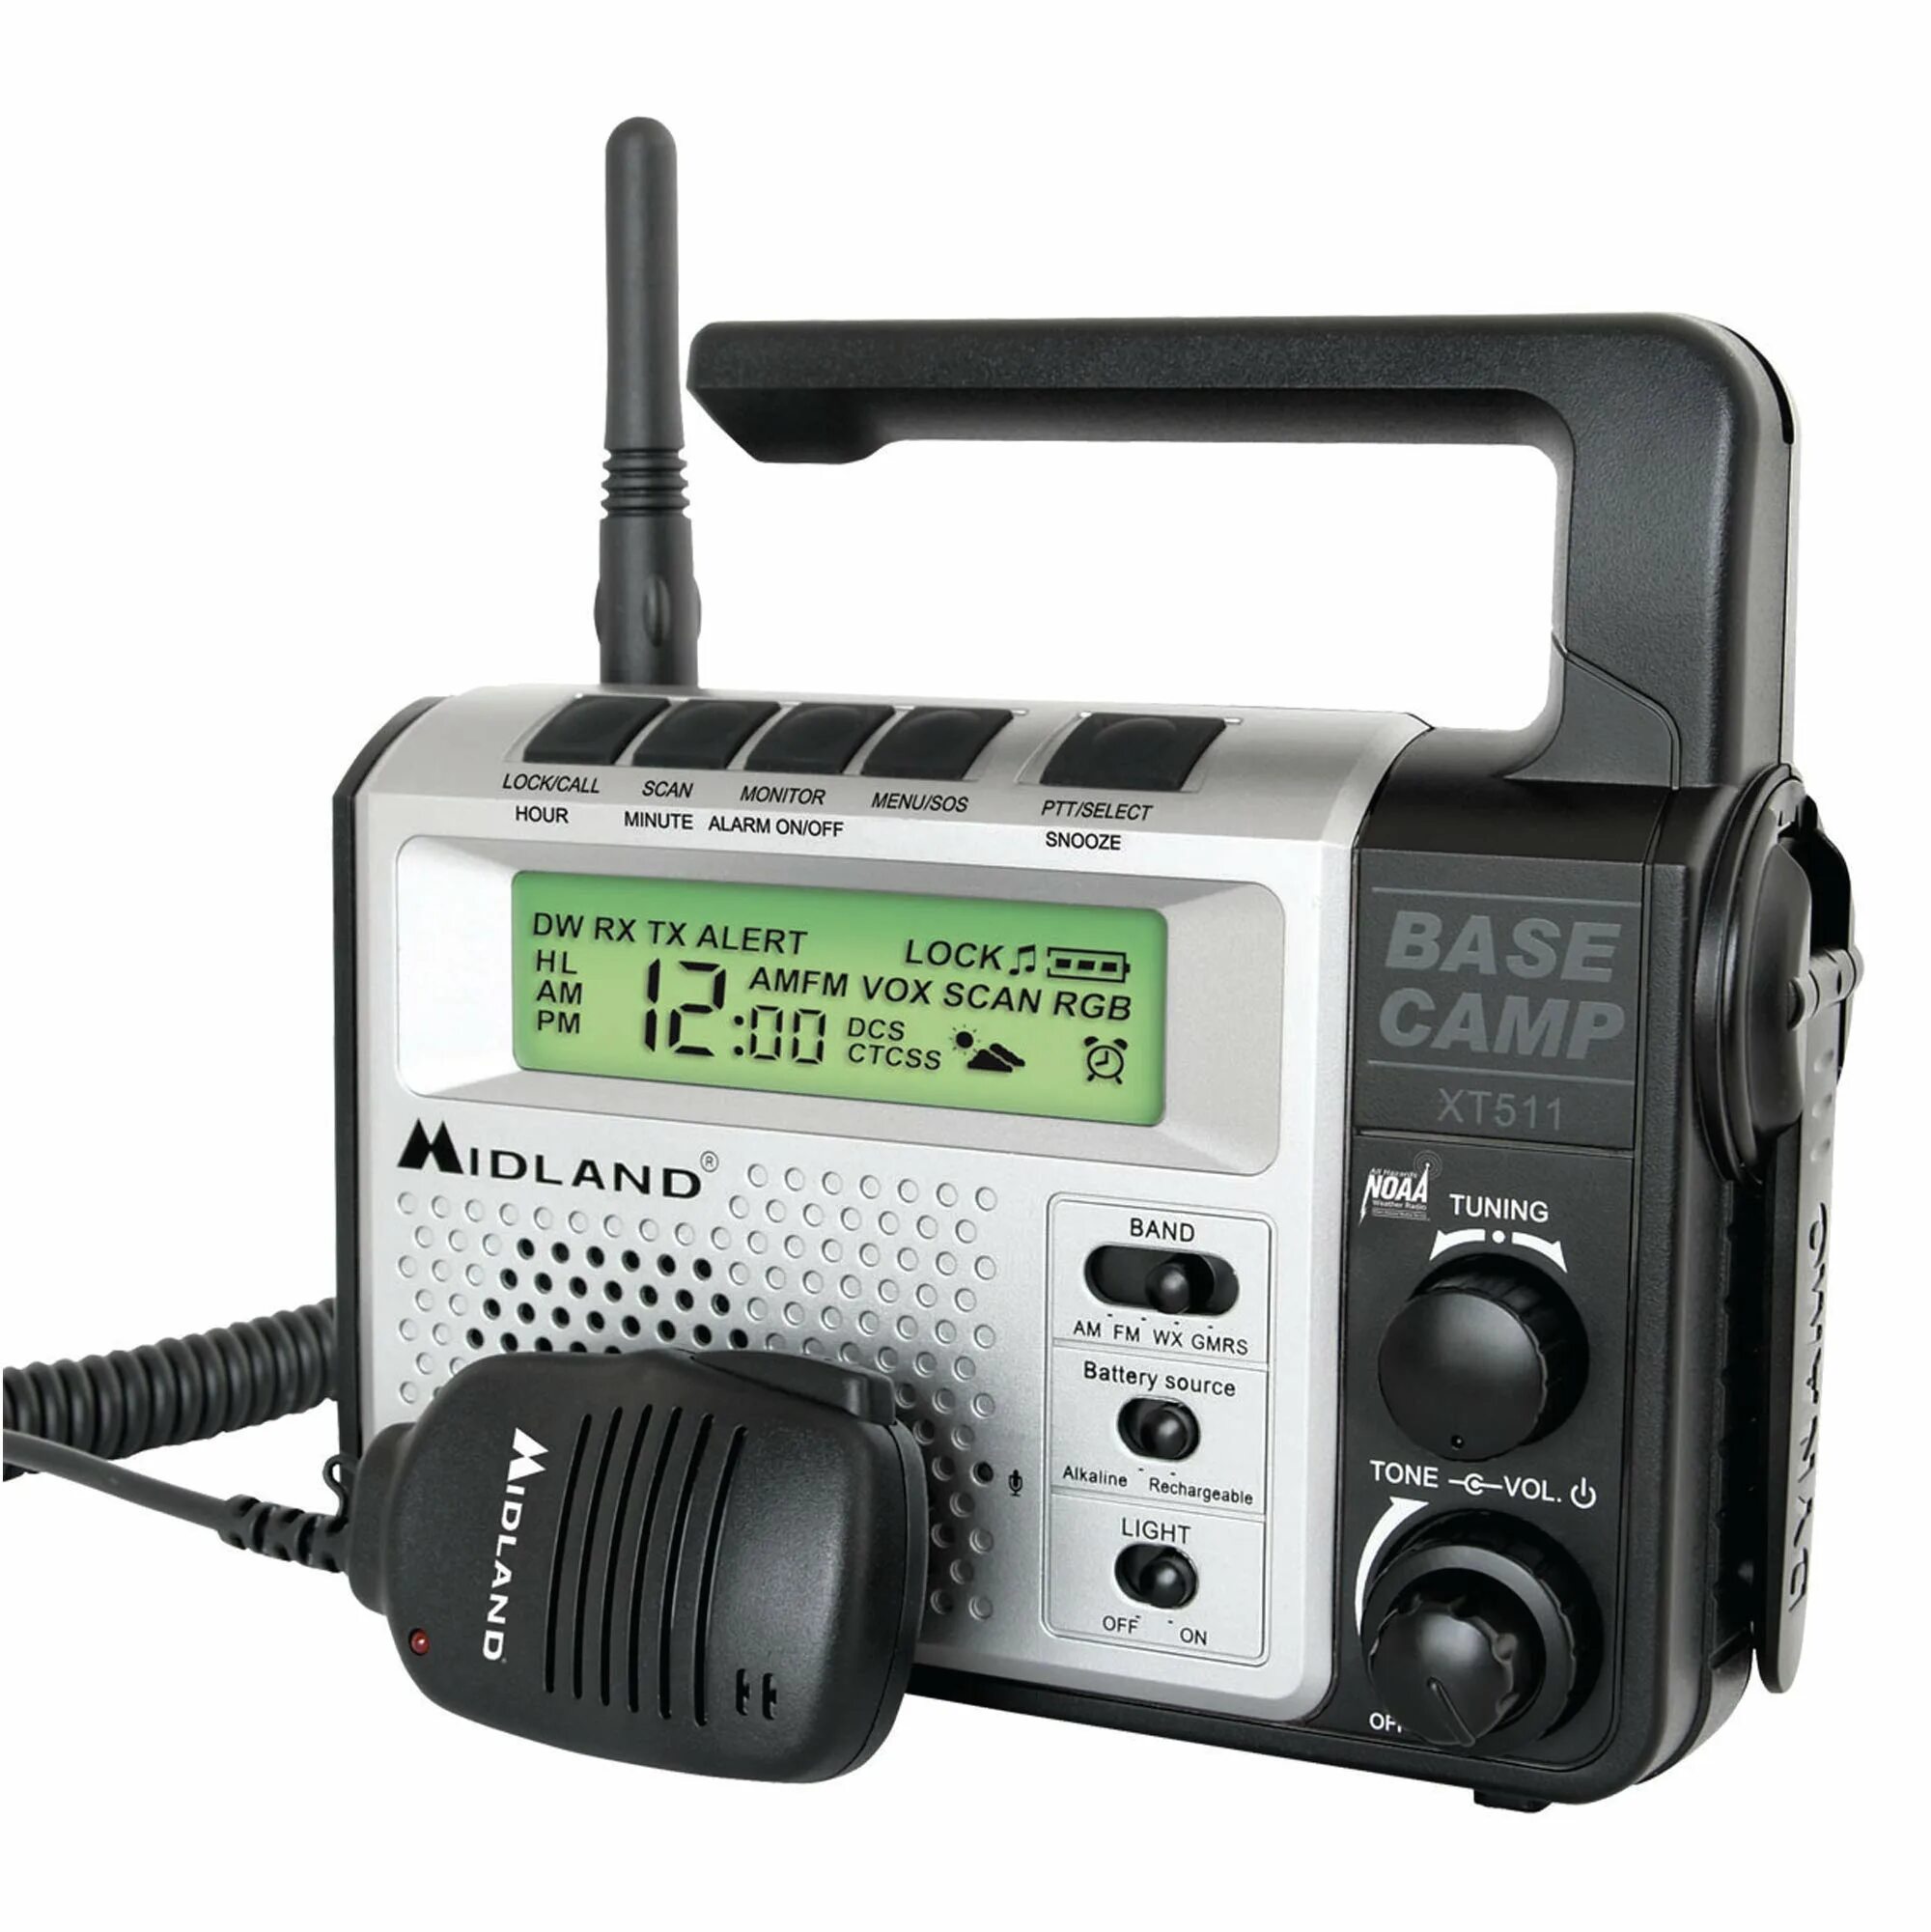 Midland xt511. Radio Base Camp Midland xt511. Радио рация Мидланд. Радиоприемник с динамомашиной.